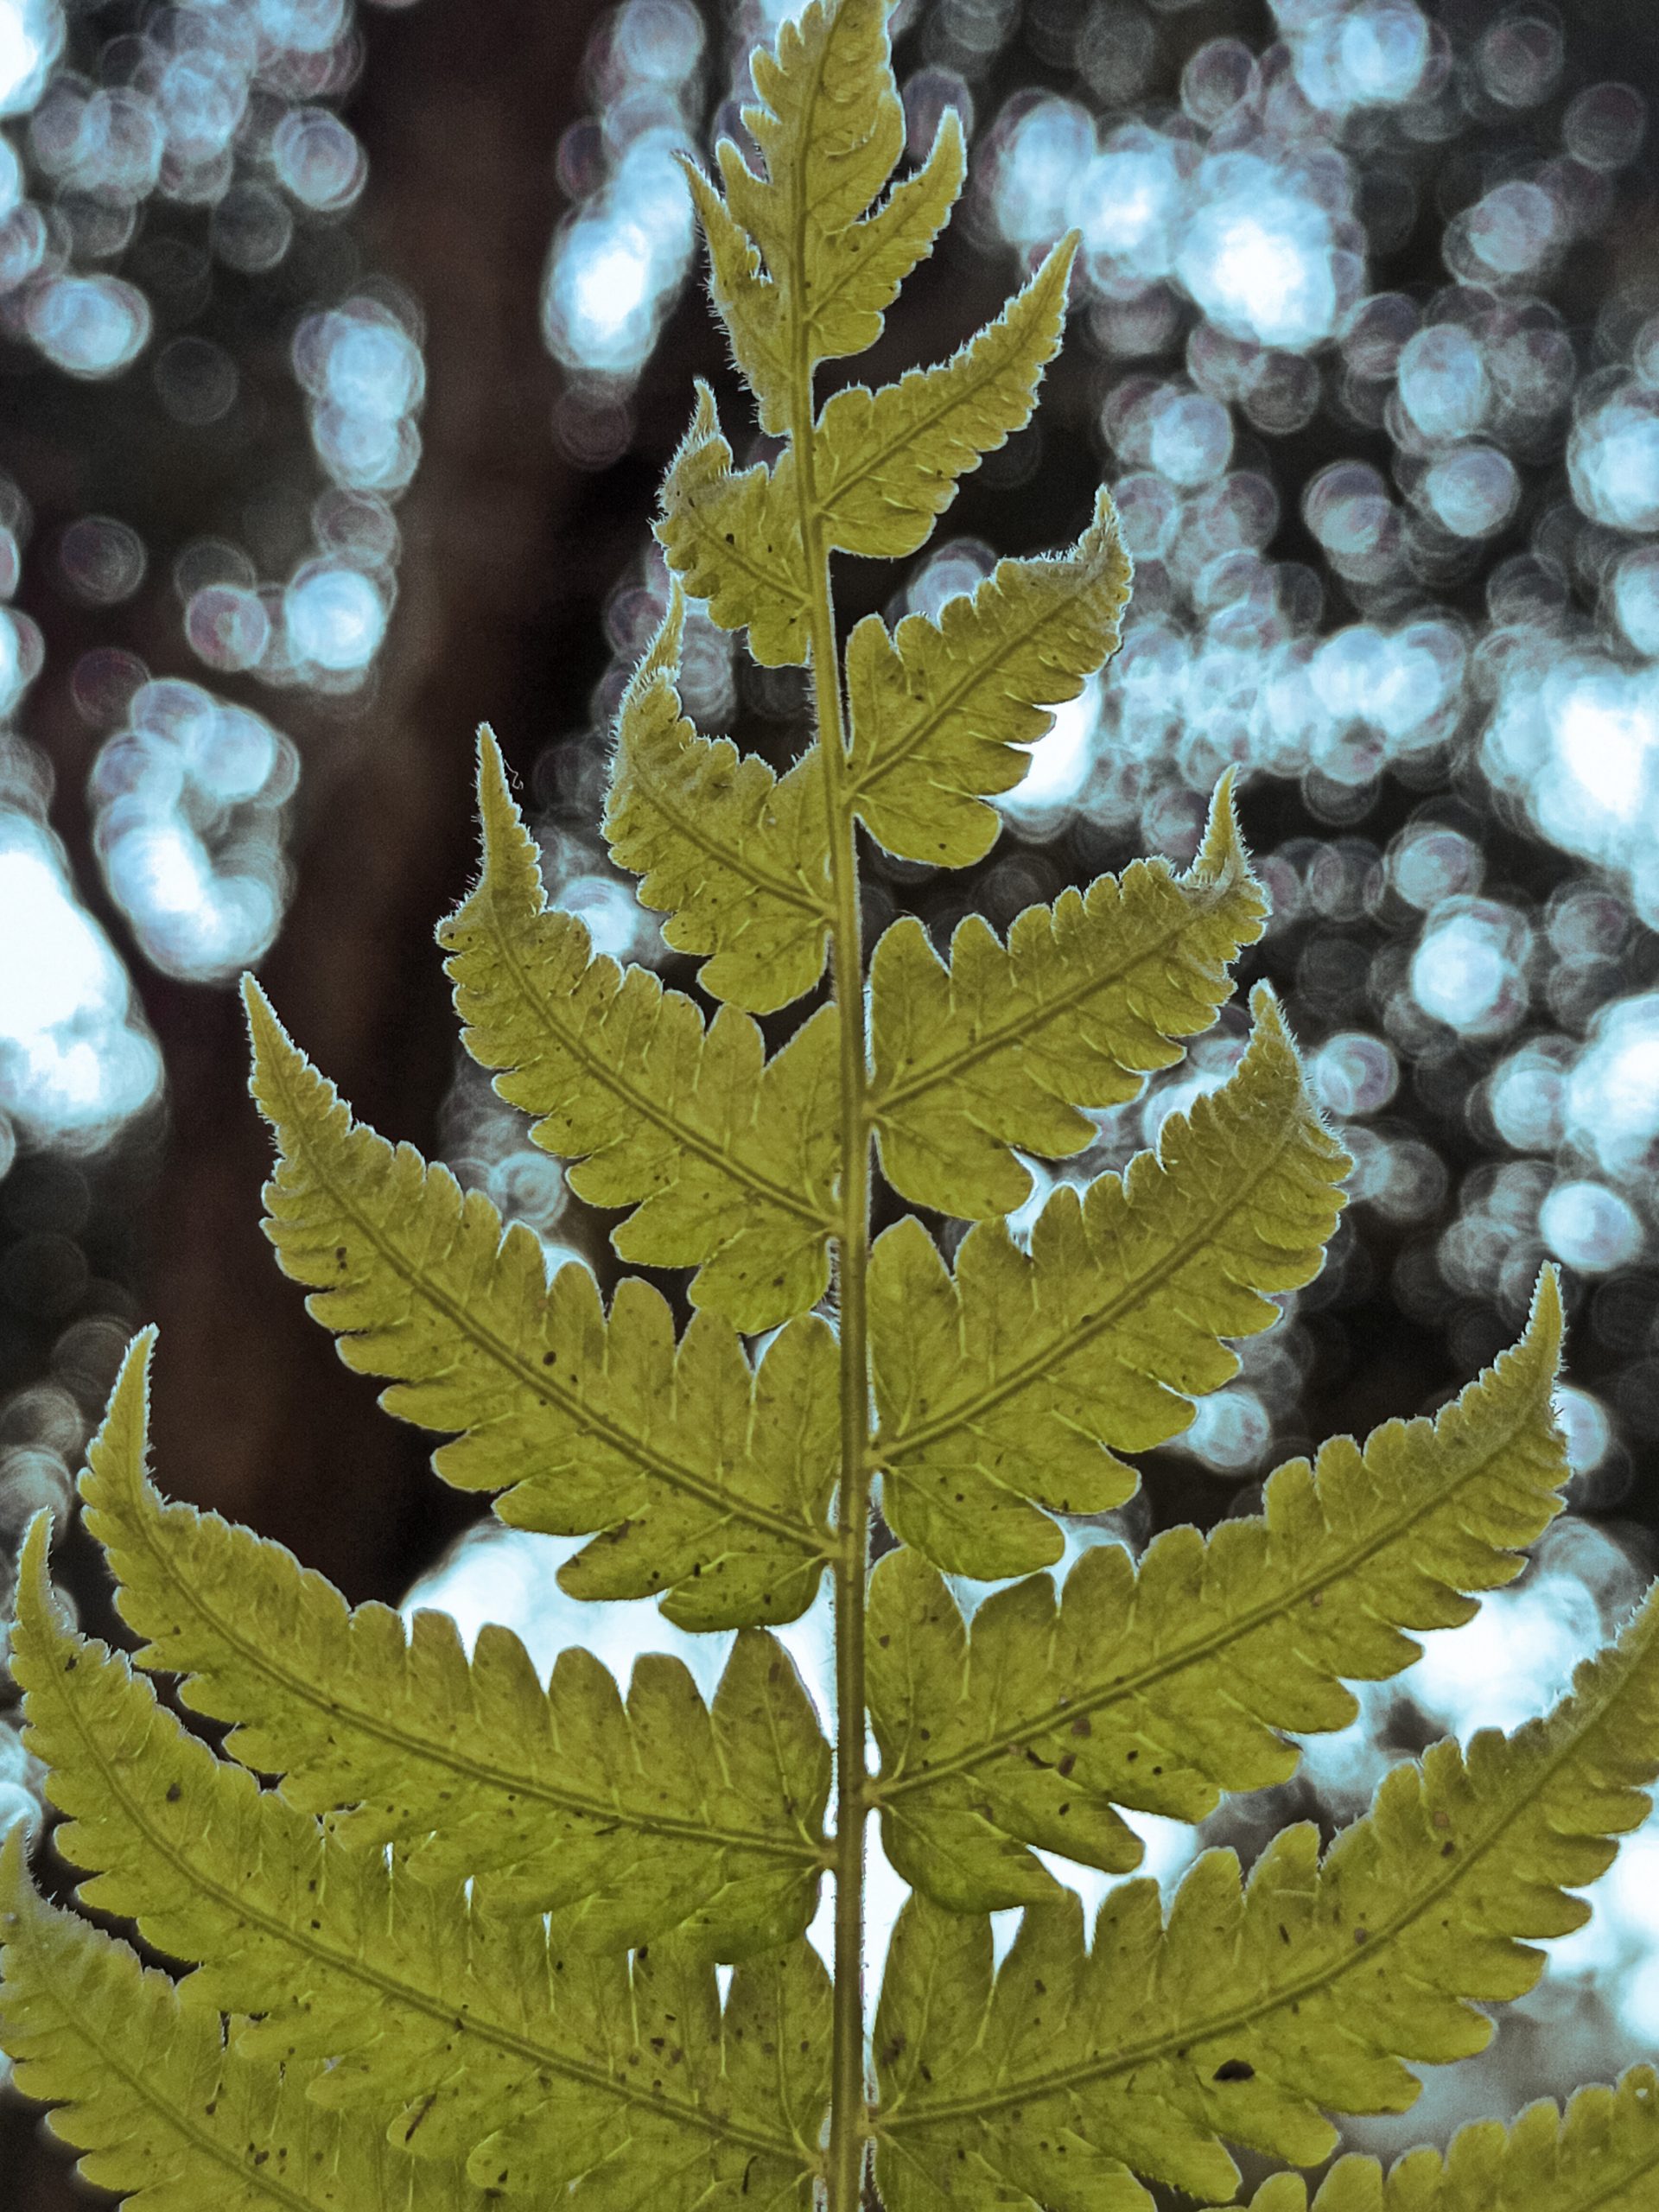 Leaf micro view